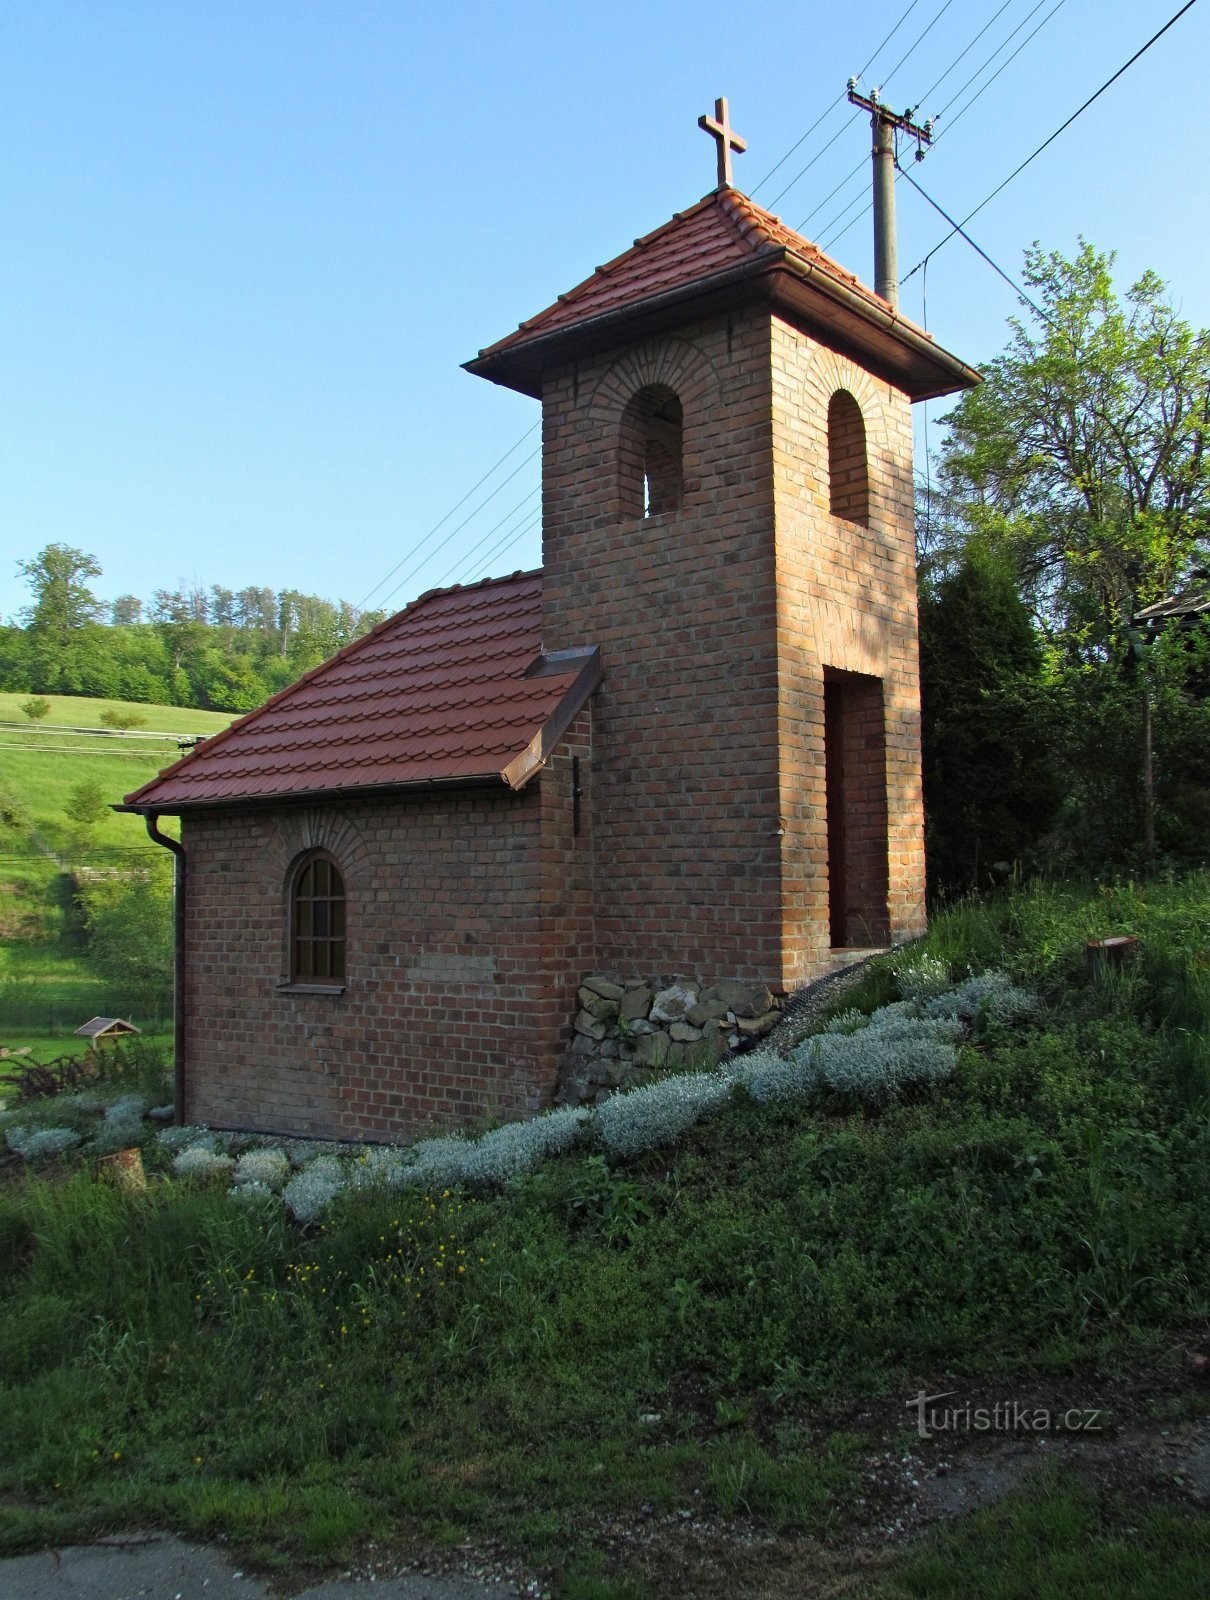 Chřiby - monumenten van het dorp Staré Hutě